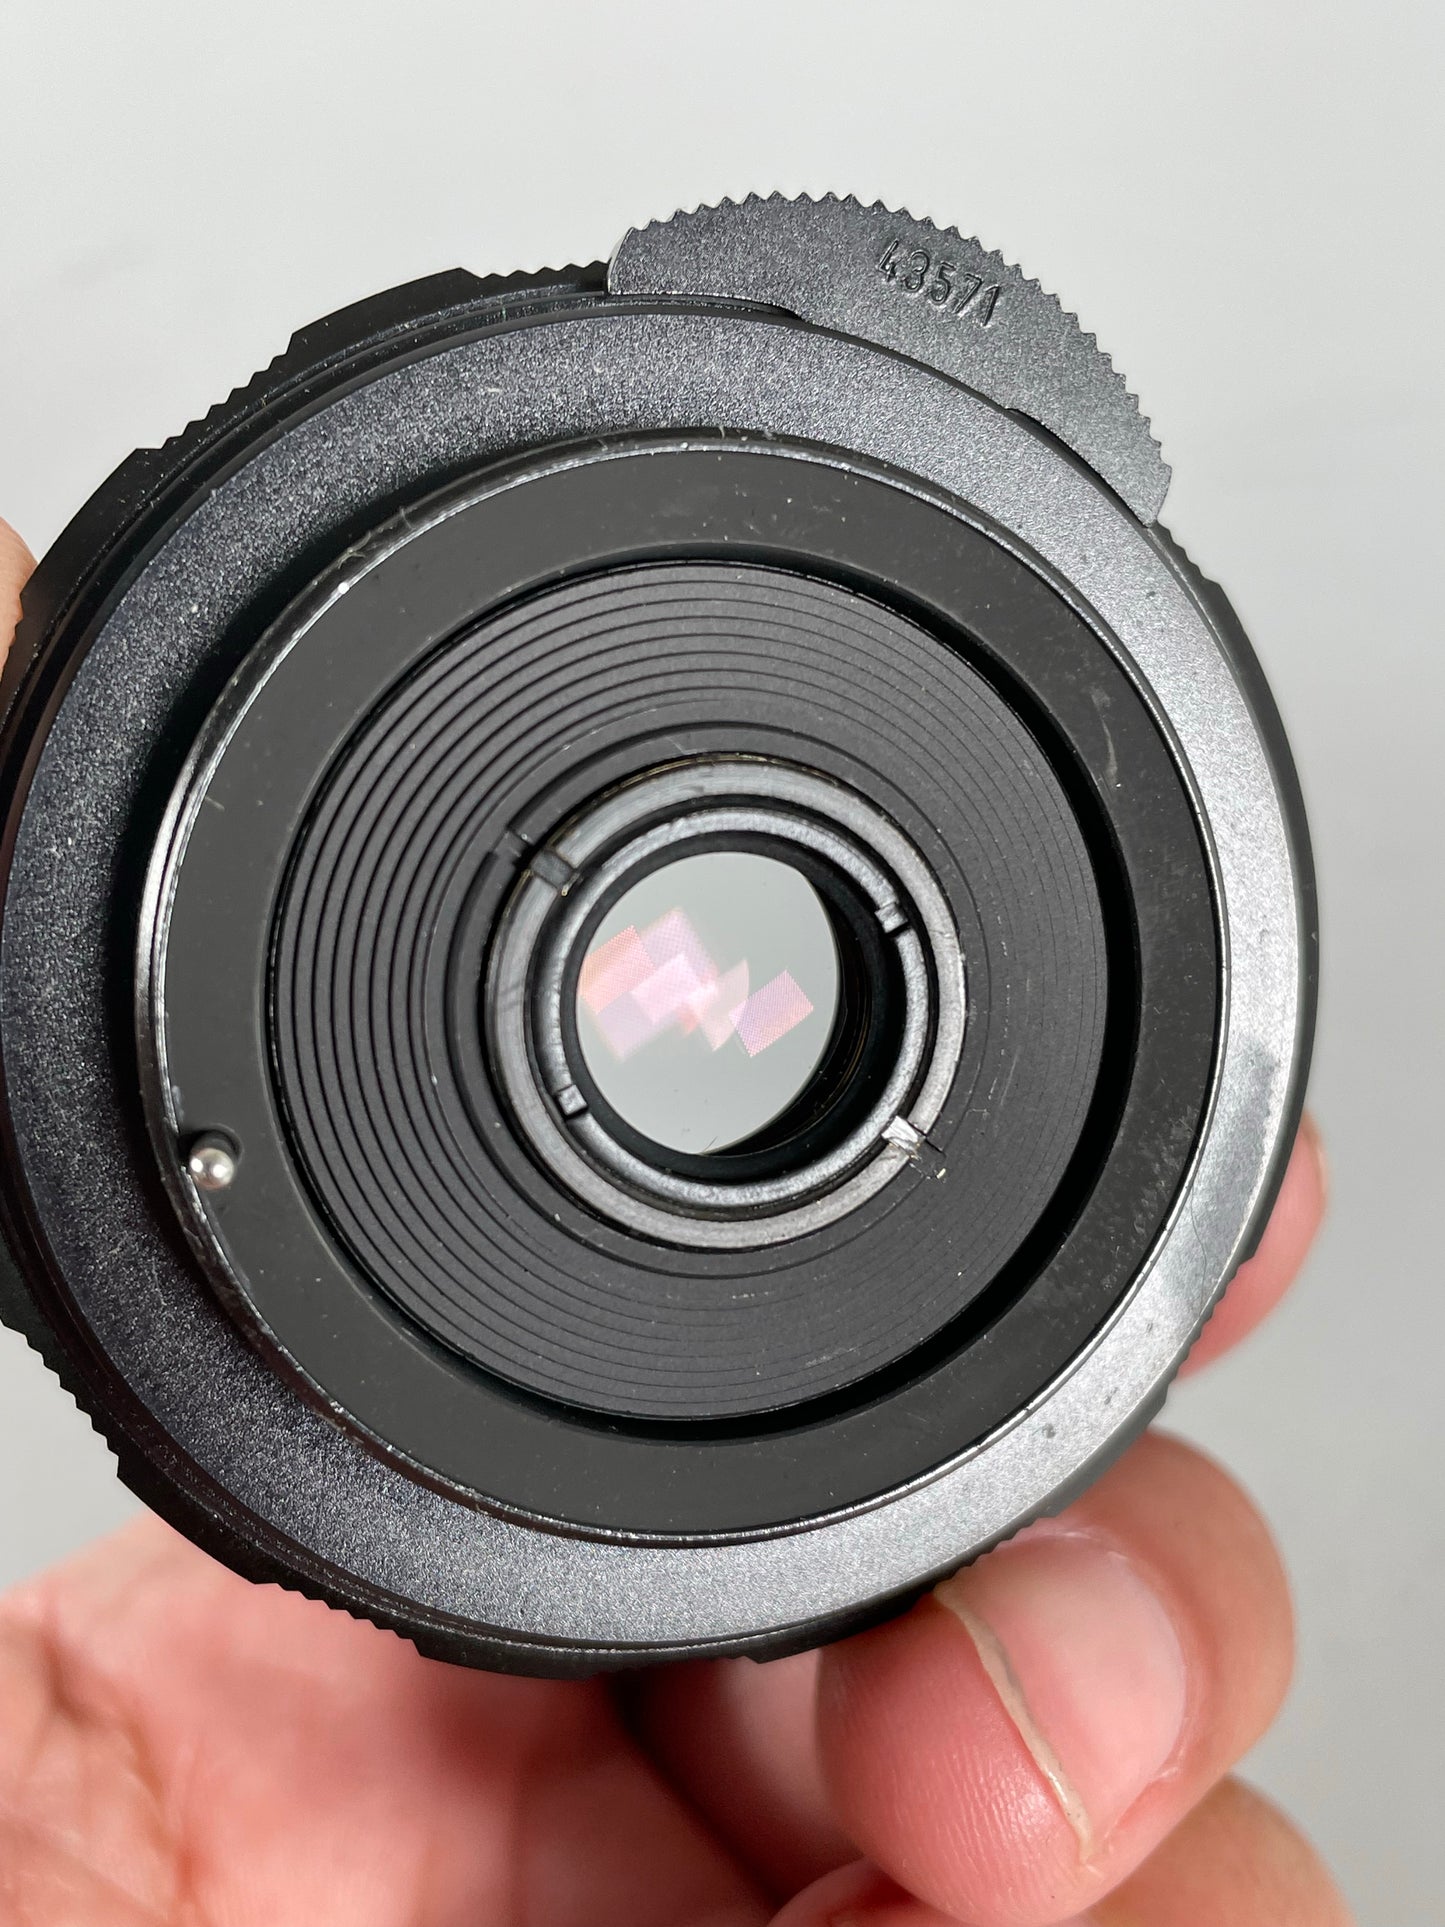 Pentax 35mm f3.5 super Takumar M42 Screw Mount Lens with case